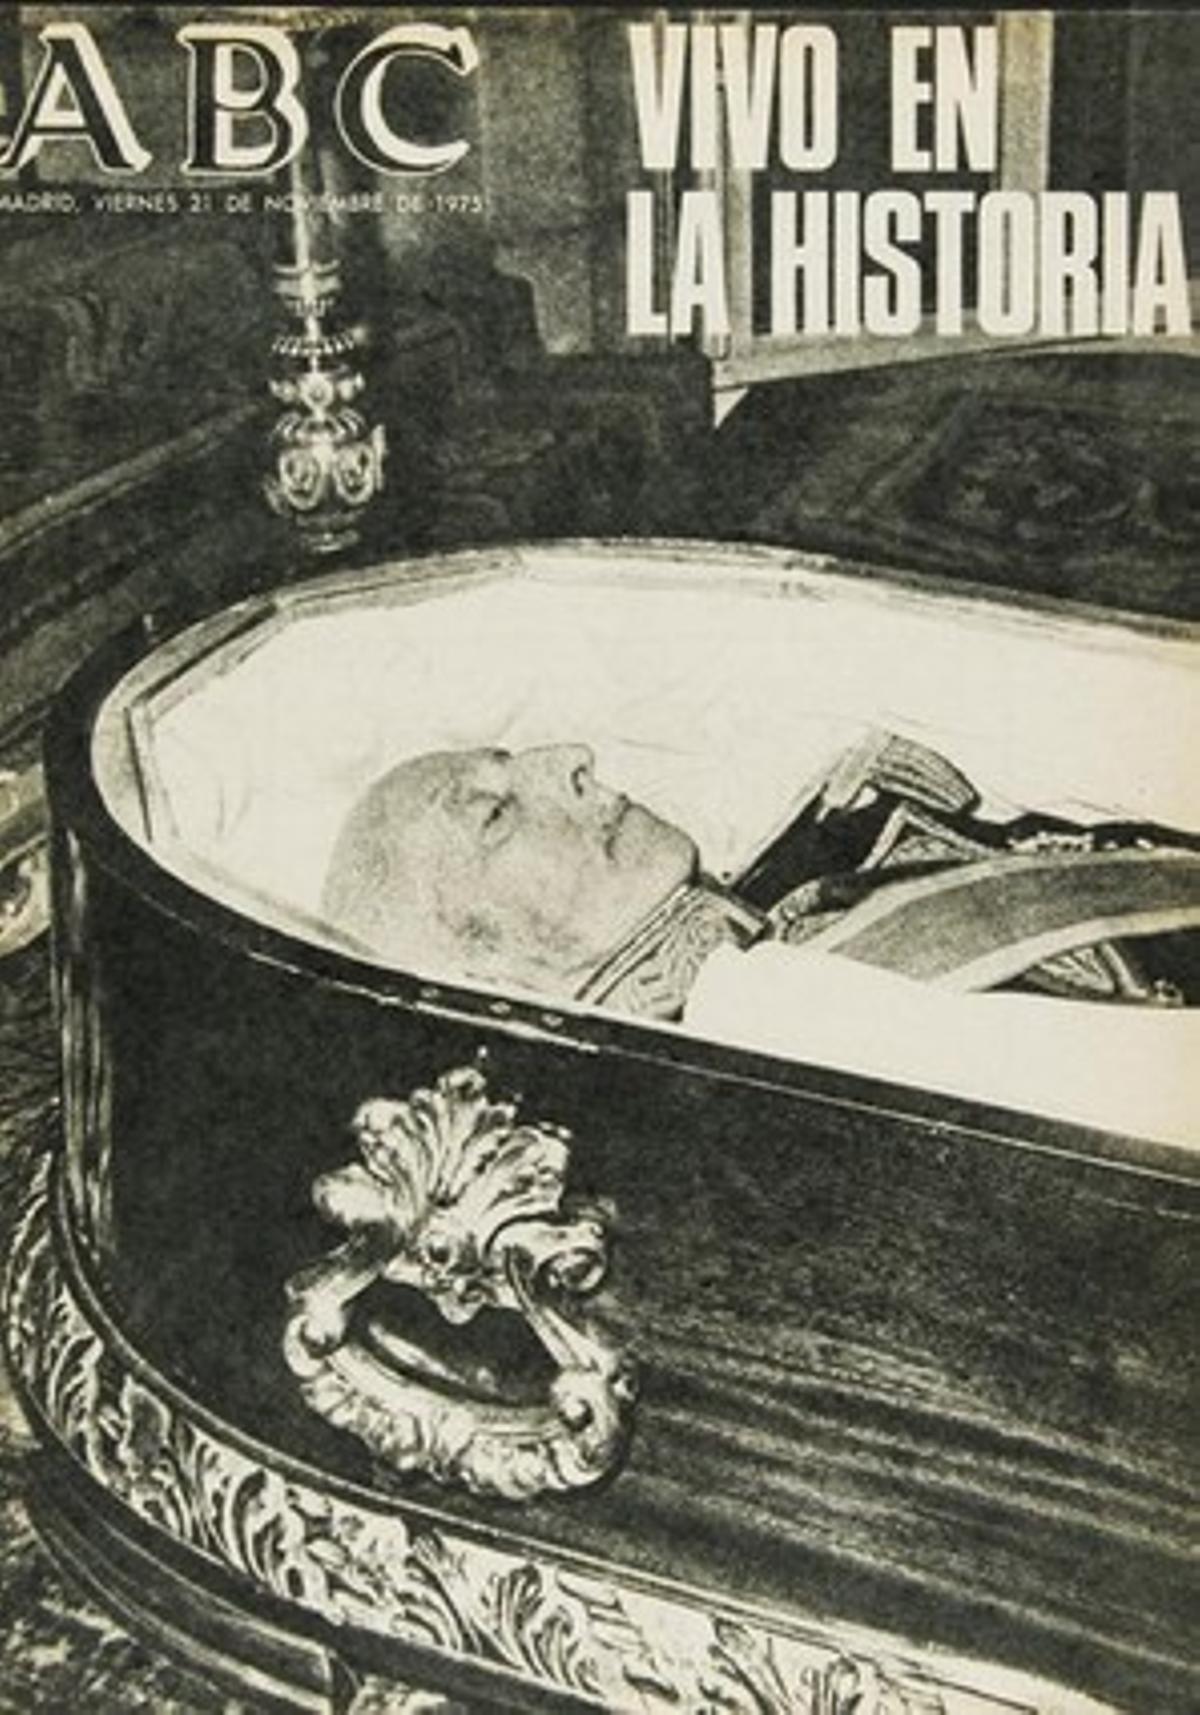 40 aniversario de la muerte de Franco. Portadas de prensa.